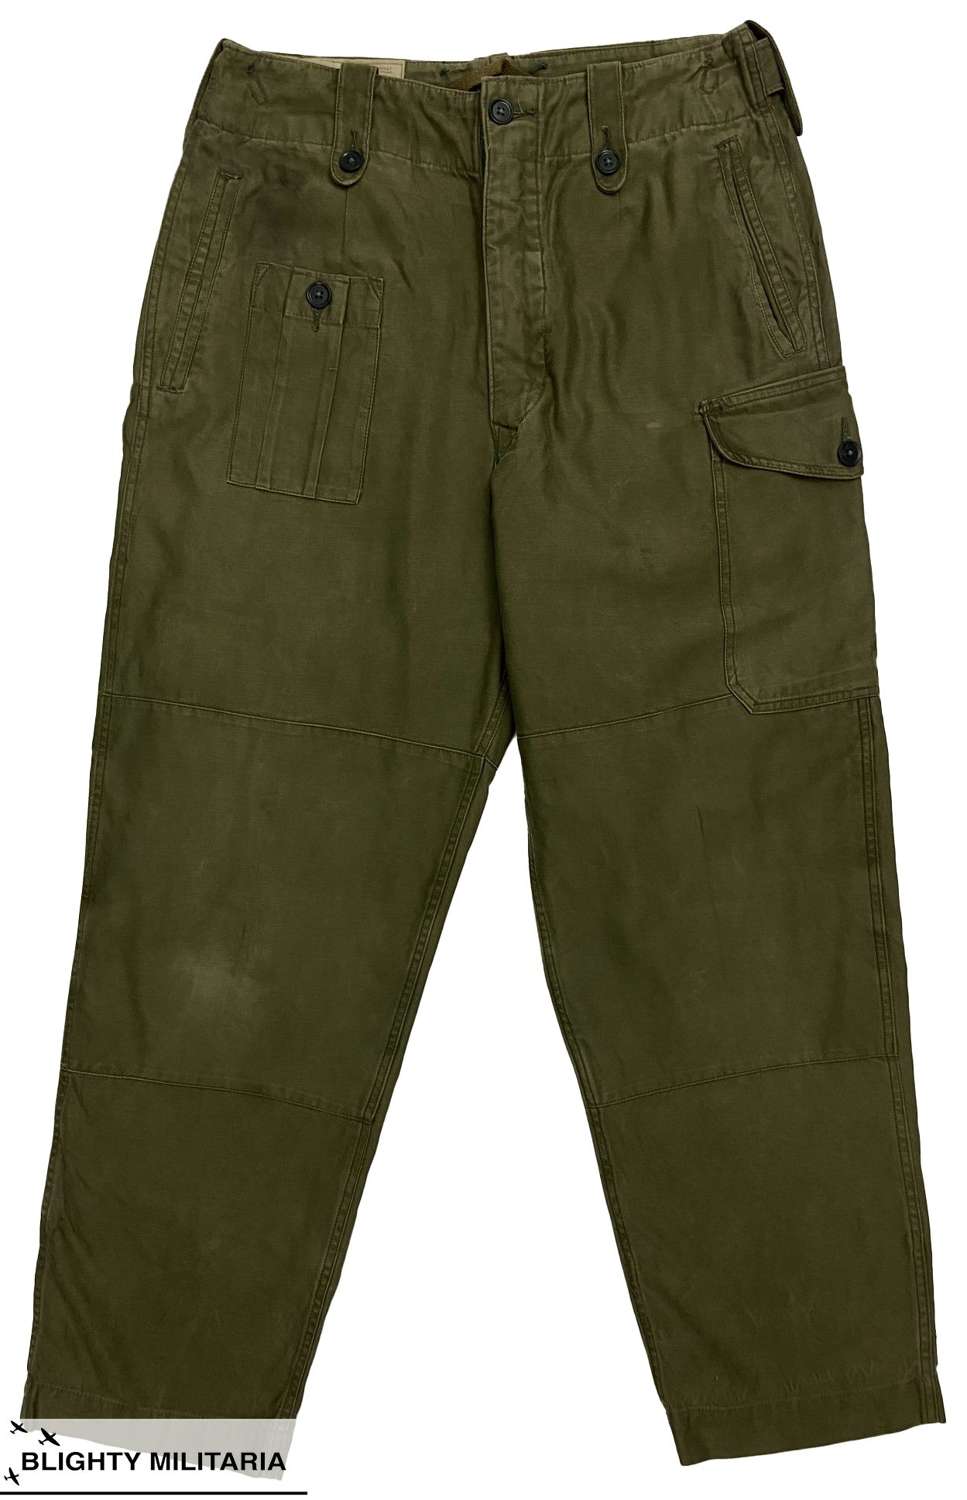 Original British Army 1960 Pattern Combat Trousers - Size 2